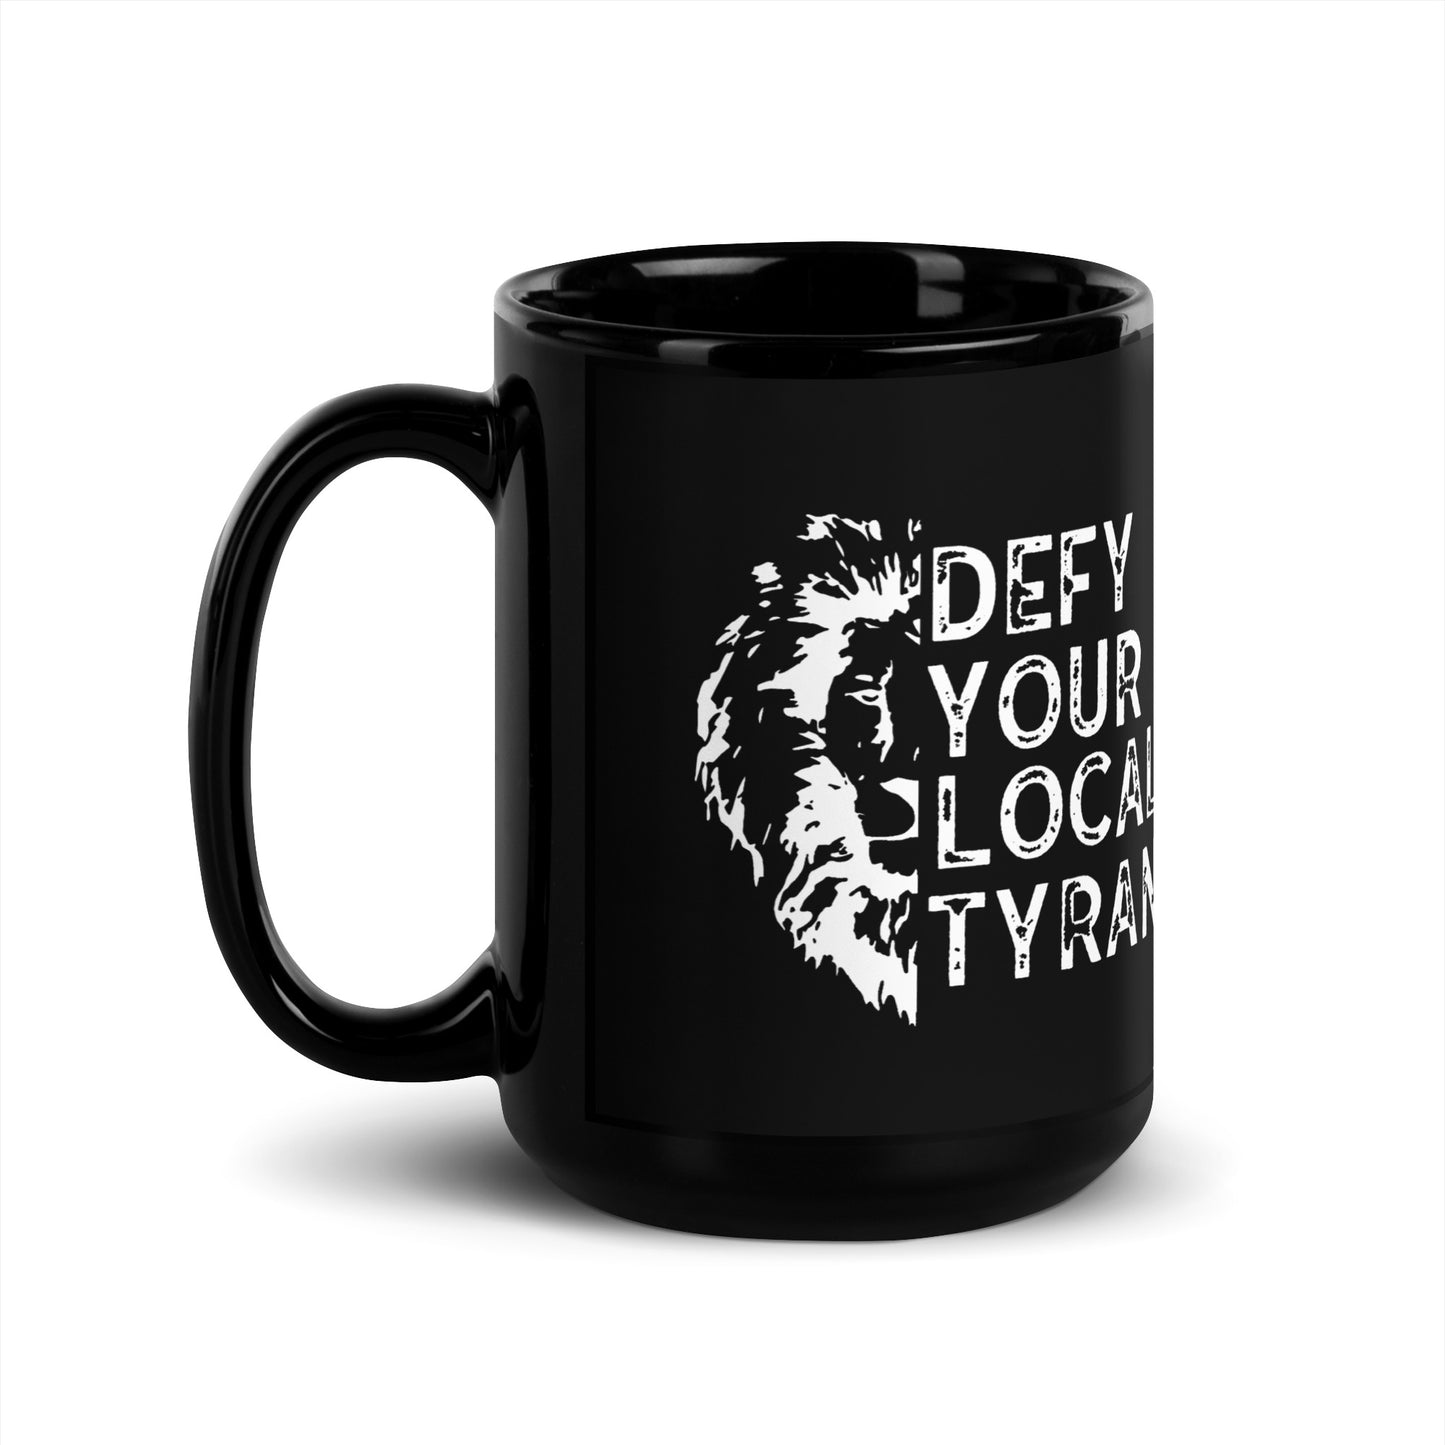 Defy Your Local Tyrant Black Coffee Mug